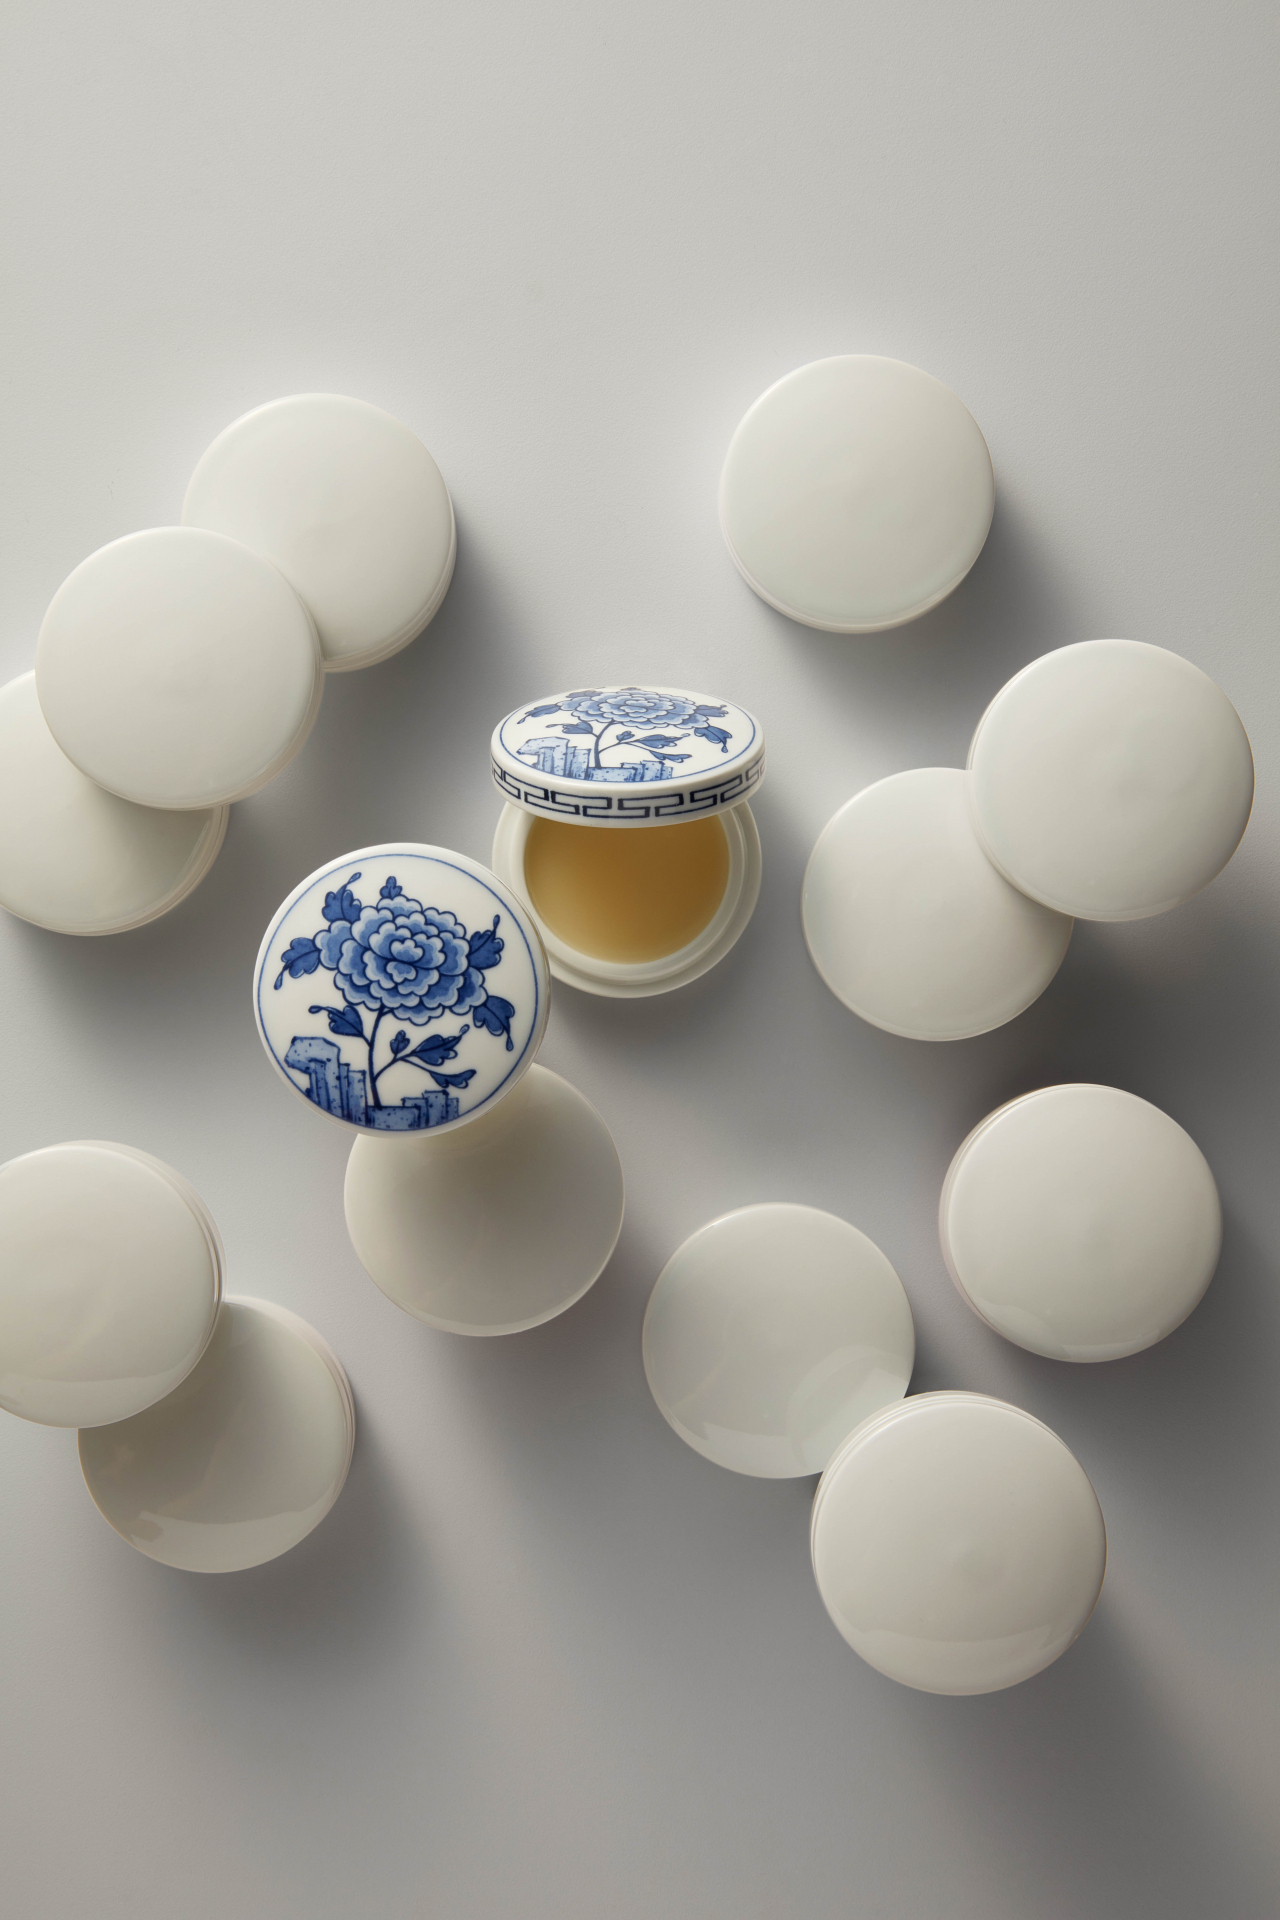 Miango, moisturizing balm from the “Princess Hwahyeop’s Porcelain Edition” (CHA)